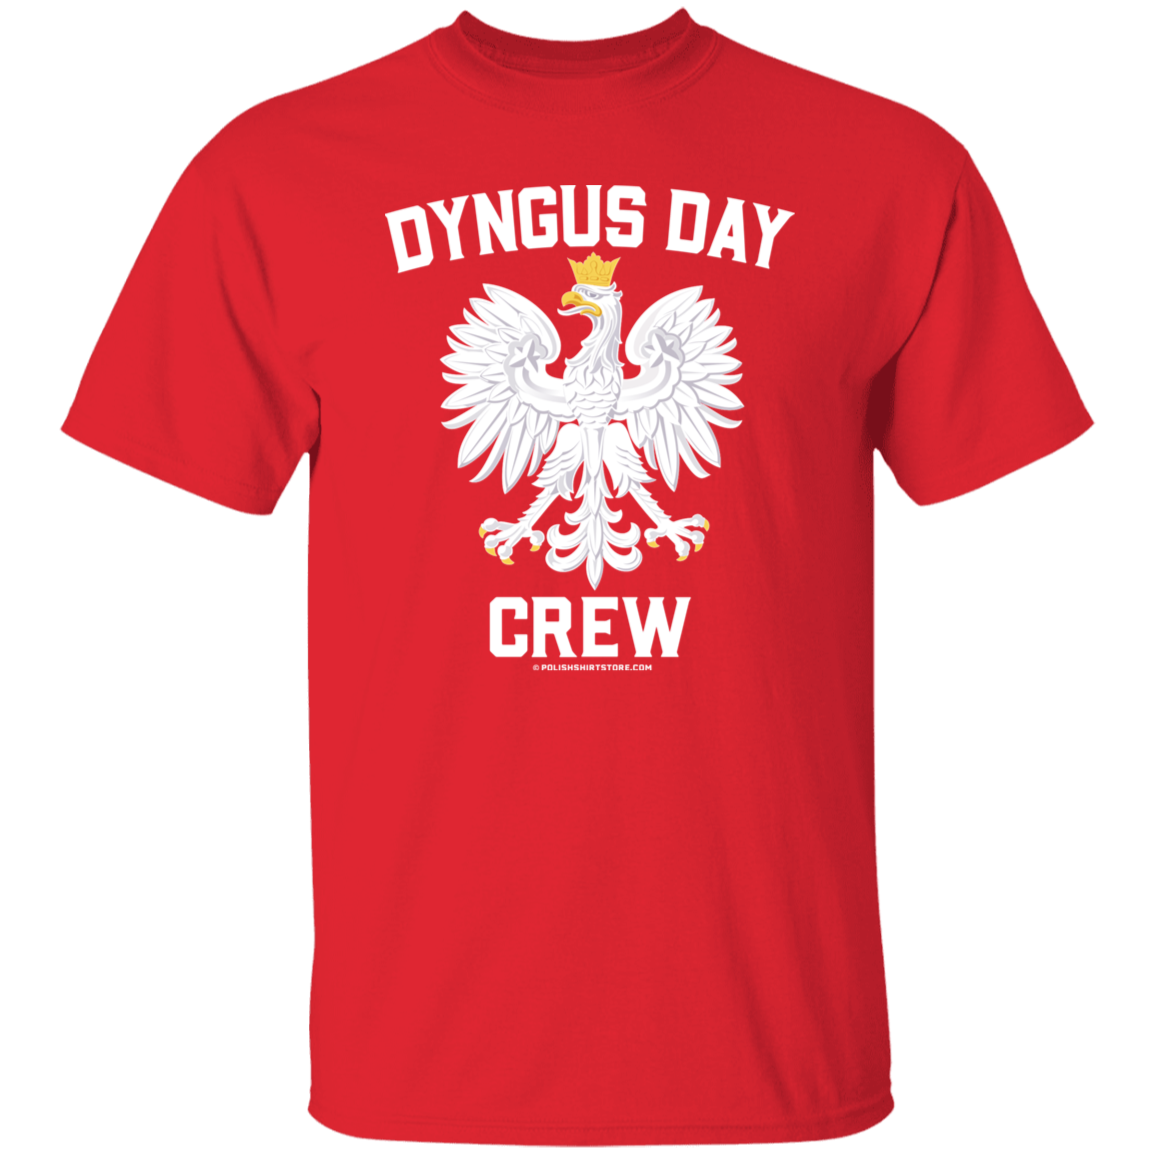 Dyngus Day Crew Apparel CustomCat G500 5.3 oz. T-Shirt Red S